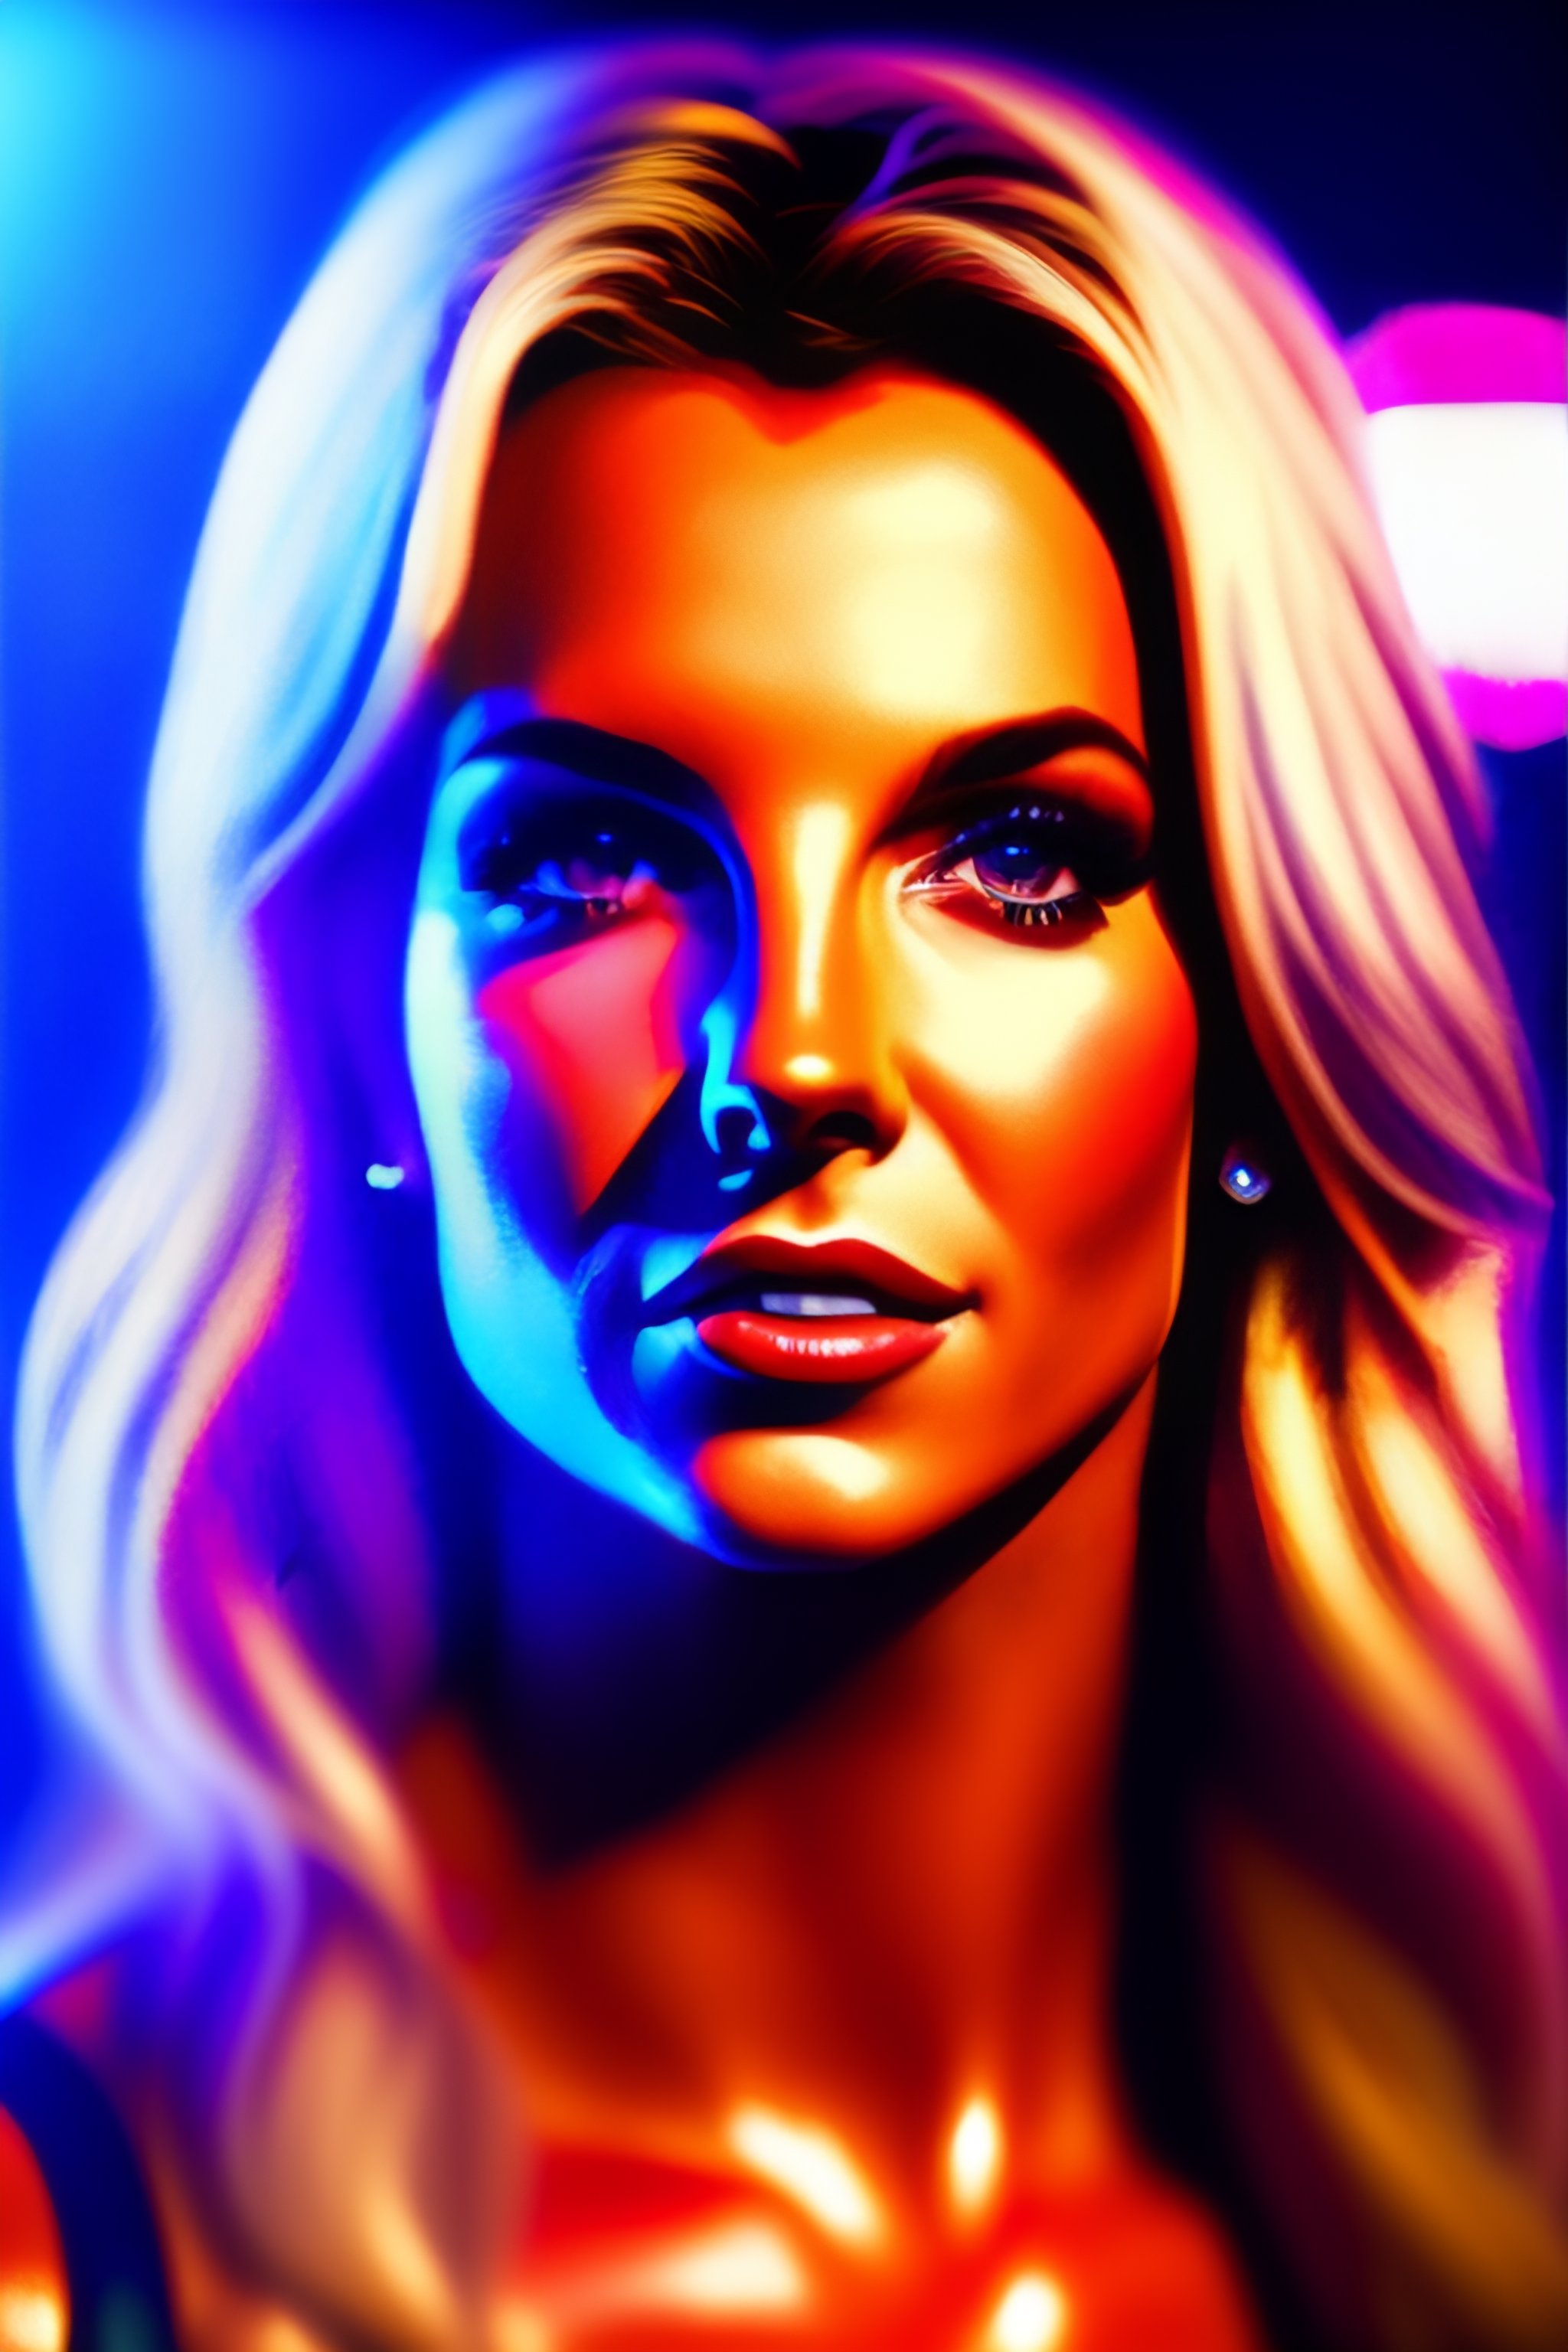 Lexica Photorealistic Britney Spears Hyperdetailed Photorealism 1 0 8 Megapixels Amazing